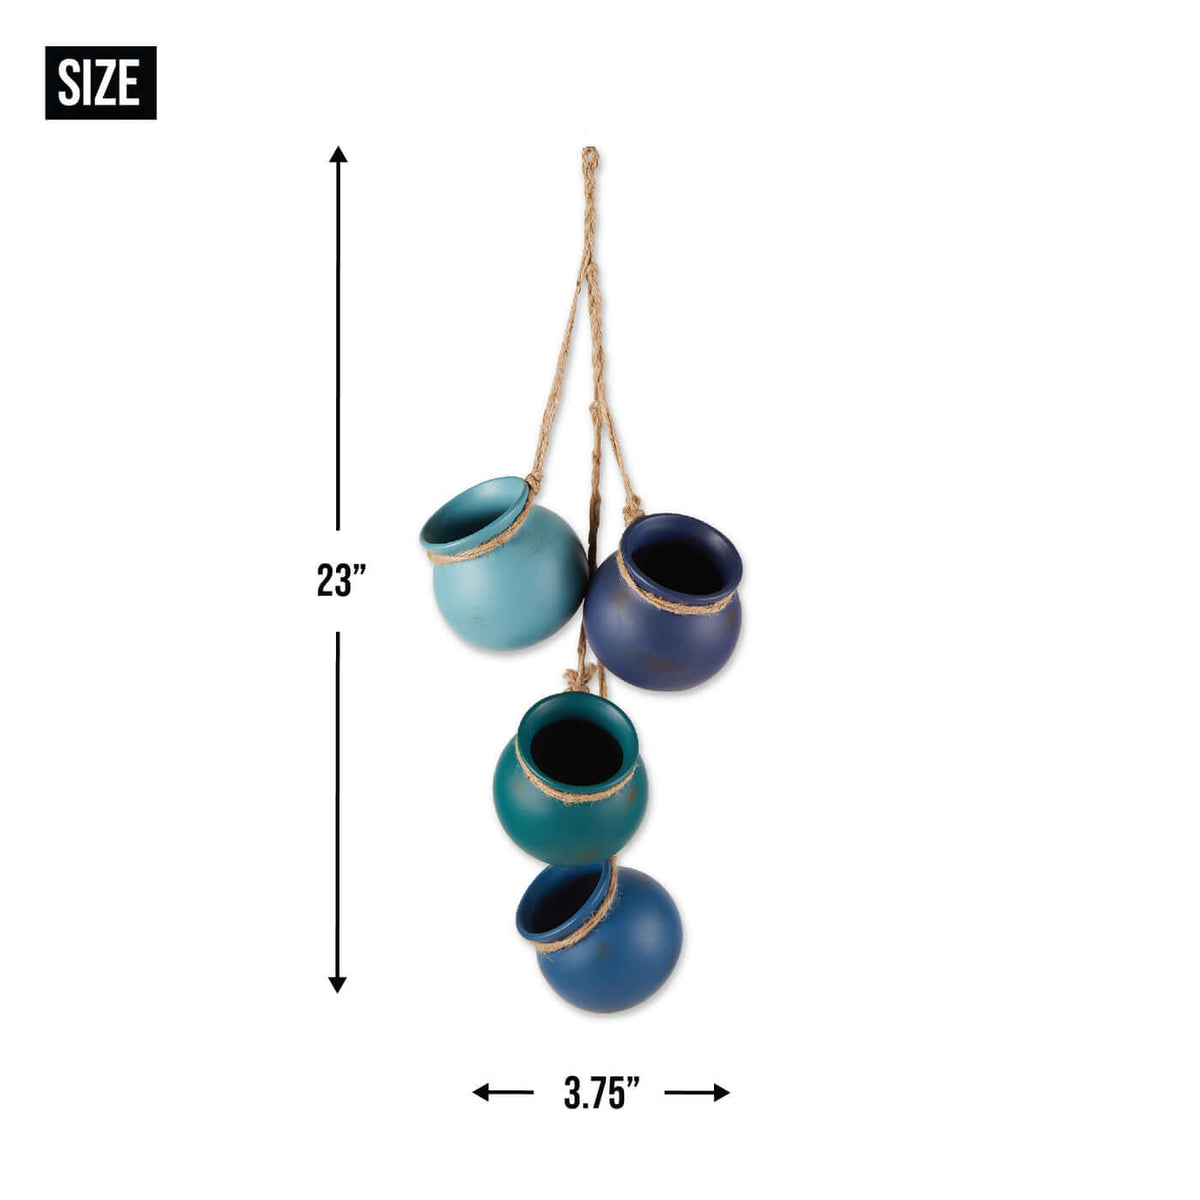  Blue Tones Dangling Mini Pots - The House of Awareness